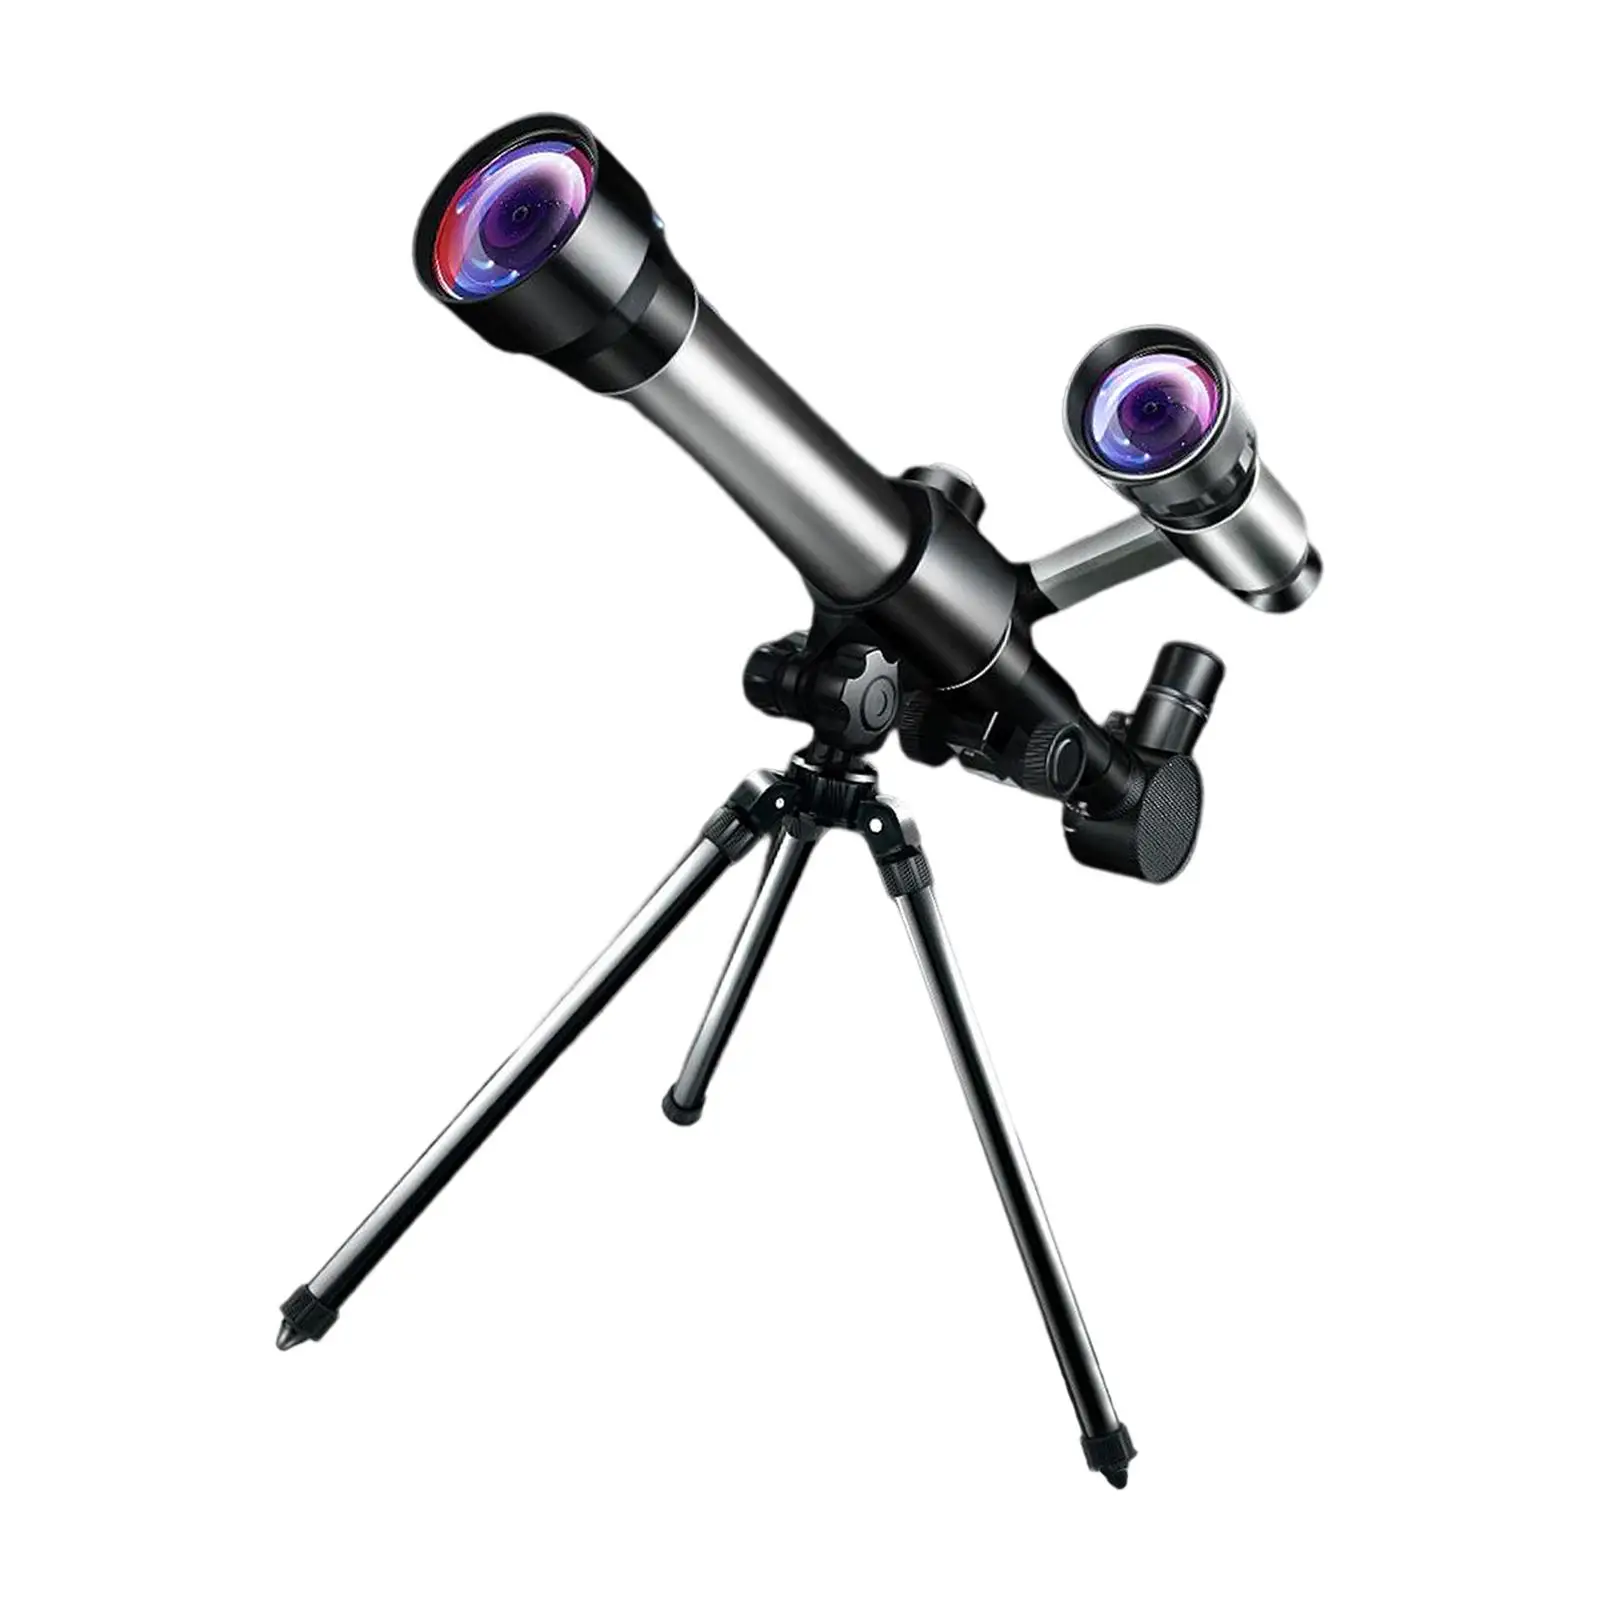 60mm Aperture Telescope with Finder Scope Tripod for Kids Adjustable Tripod